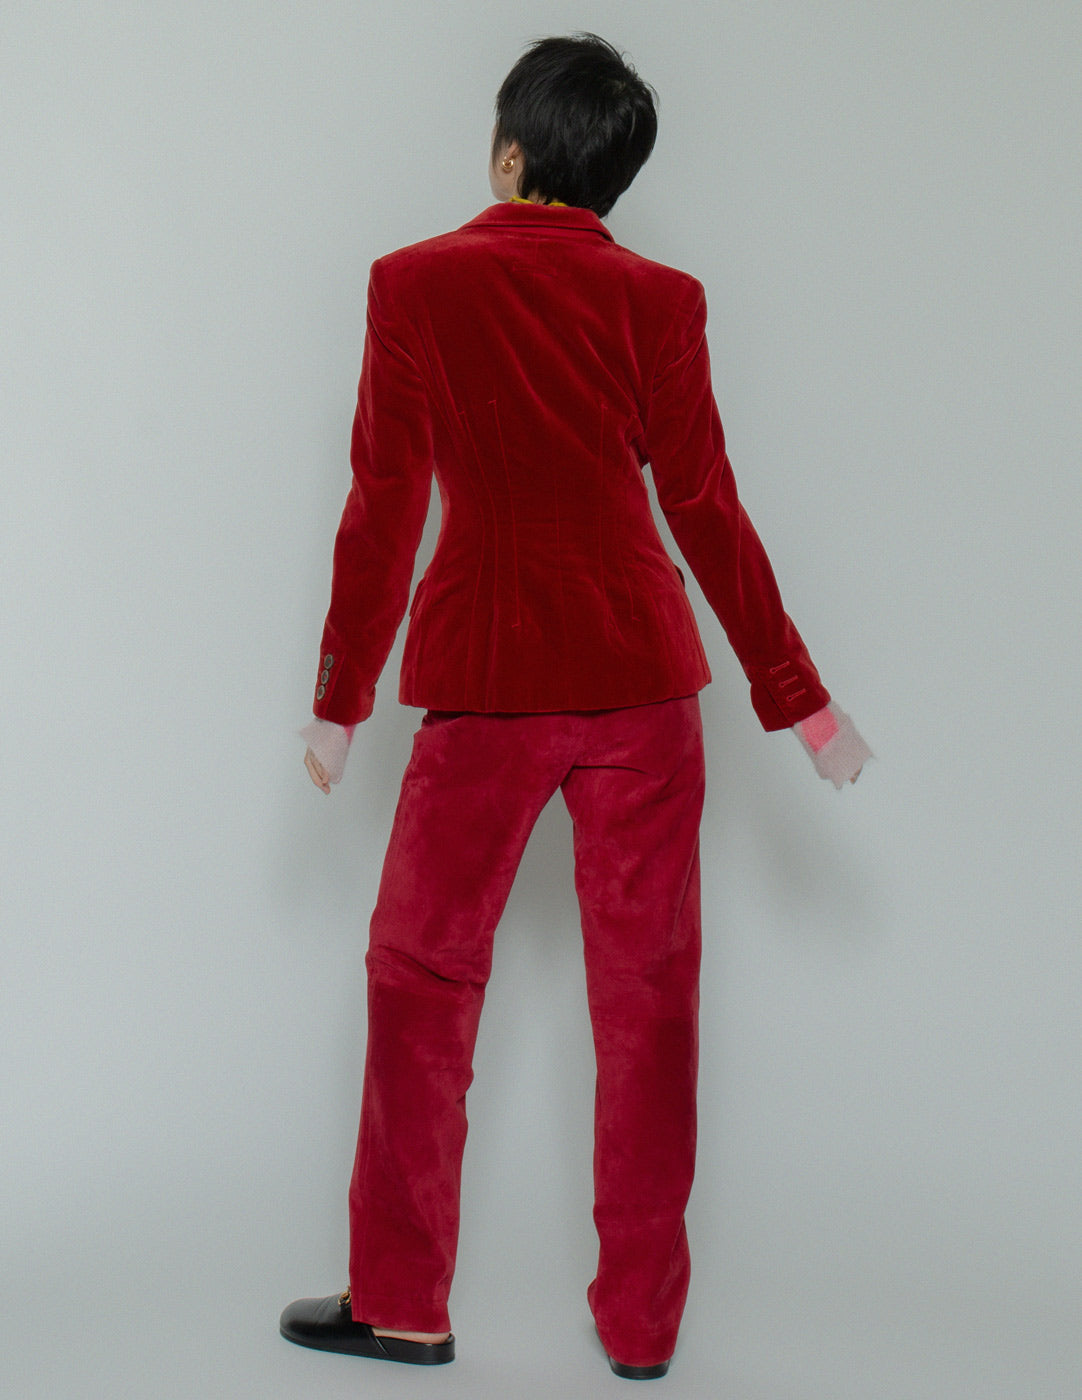 Jean Paul Gaultier vintage red velvet blazer back view